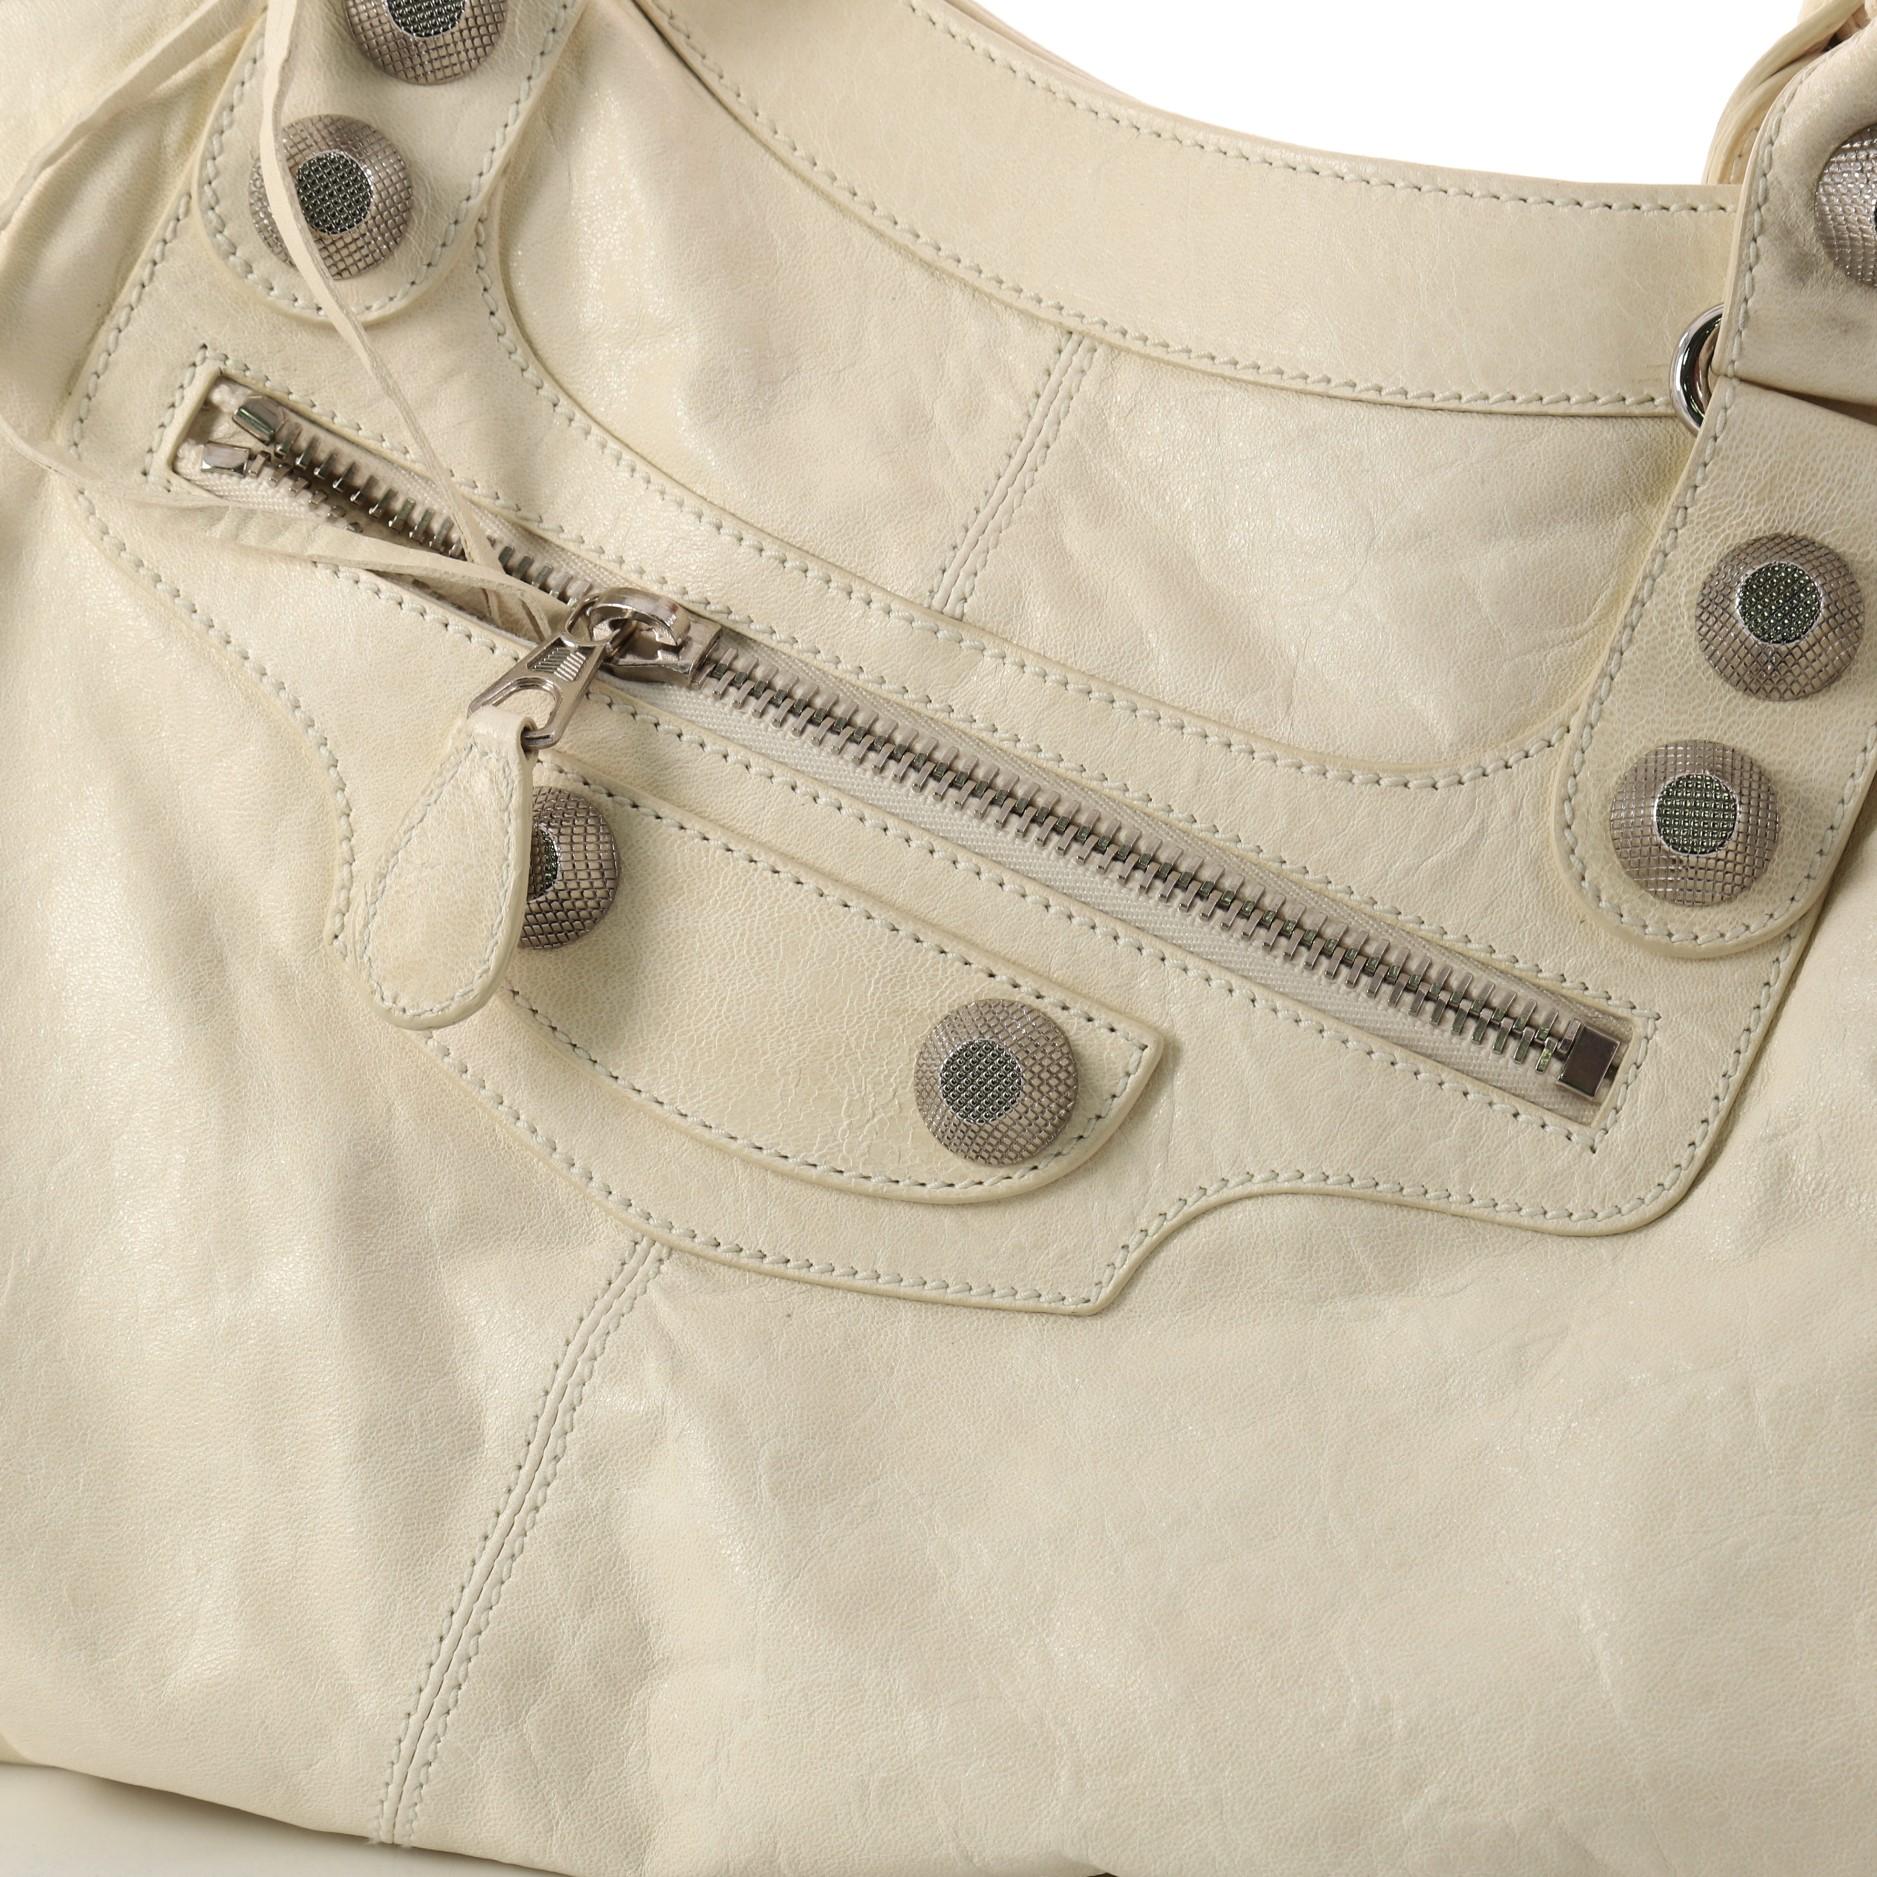 Balenciaga Brief Giant Studs Handbag Leather  3